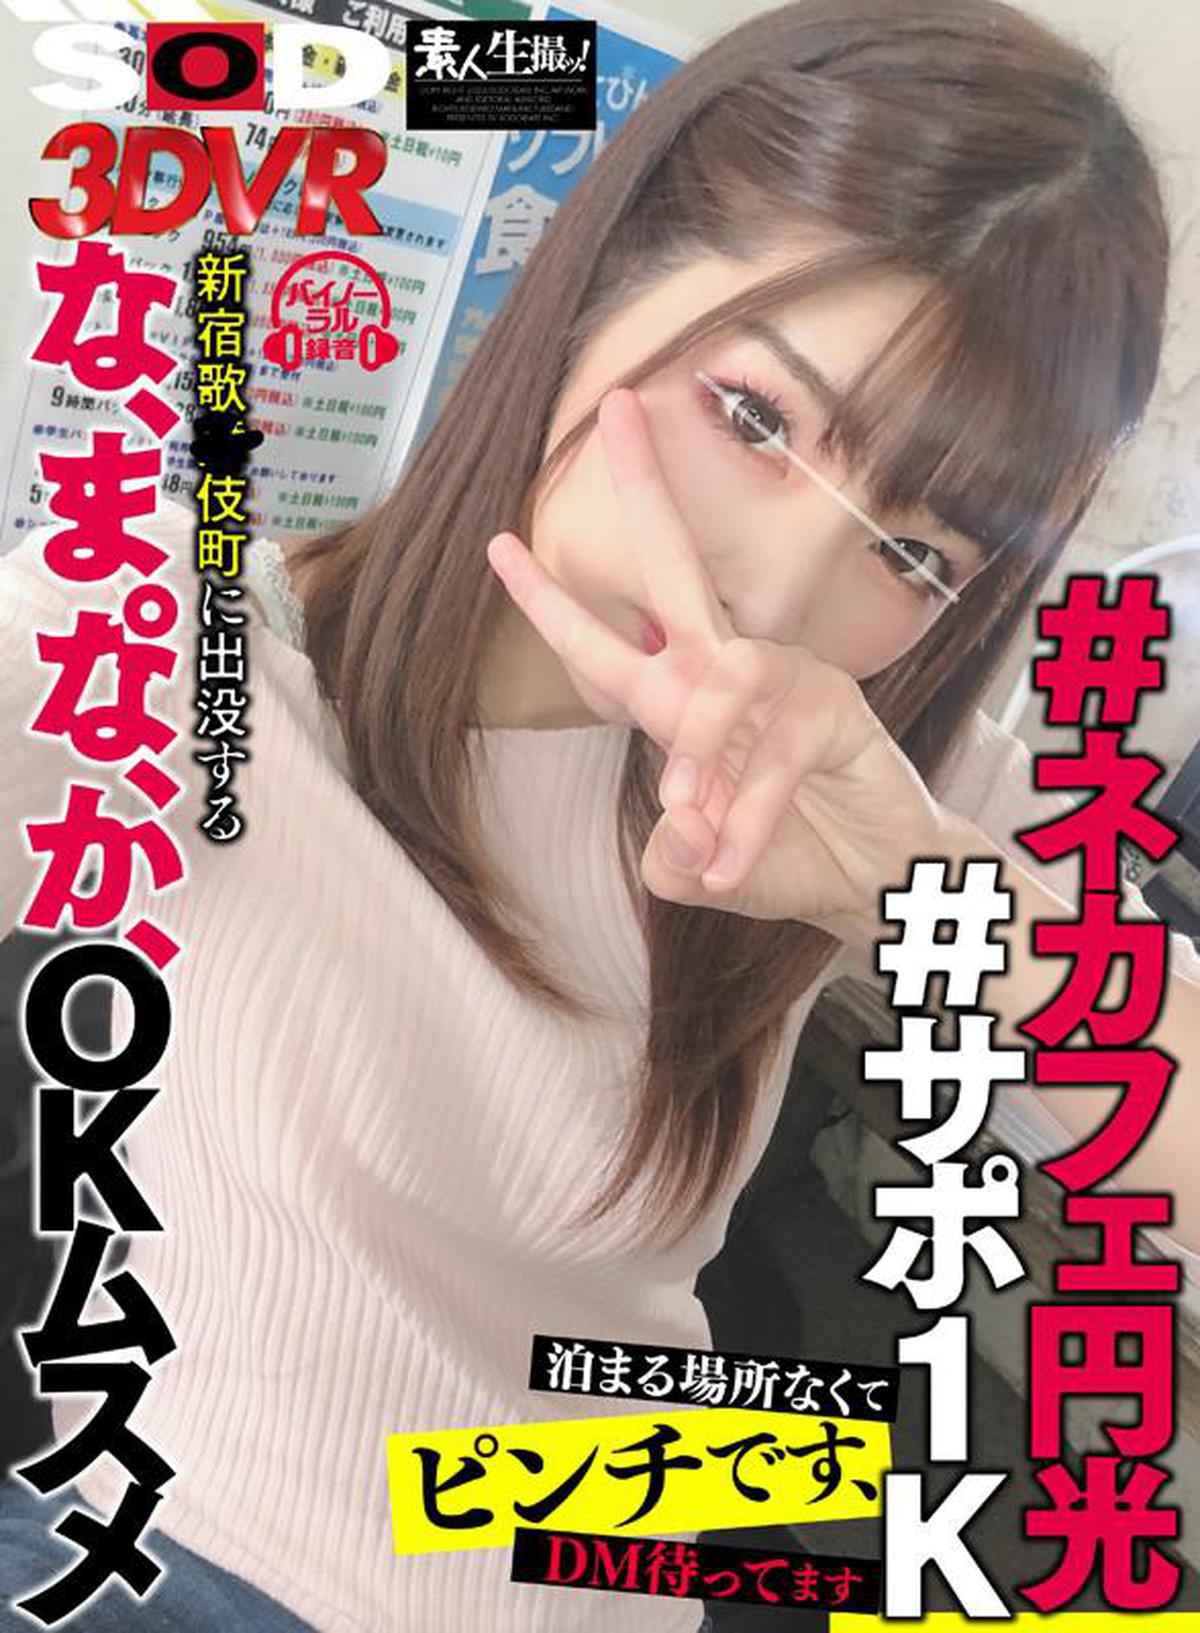 (VR) 3DSVR-0656 #Necafe Enko #Support 1K 我手頭拮据，因為我沒有地方住，我在等DM新宿歌舞伎○不要出現在歌舞伎町。嗯，好的娘